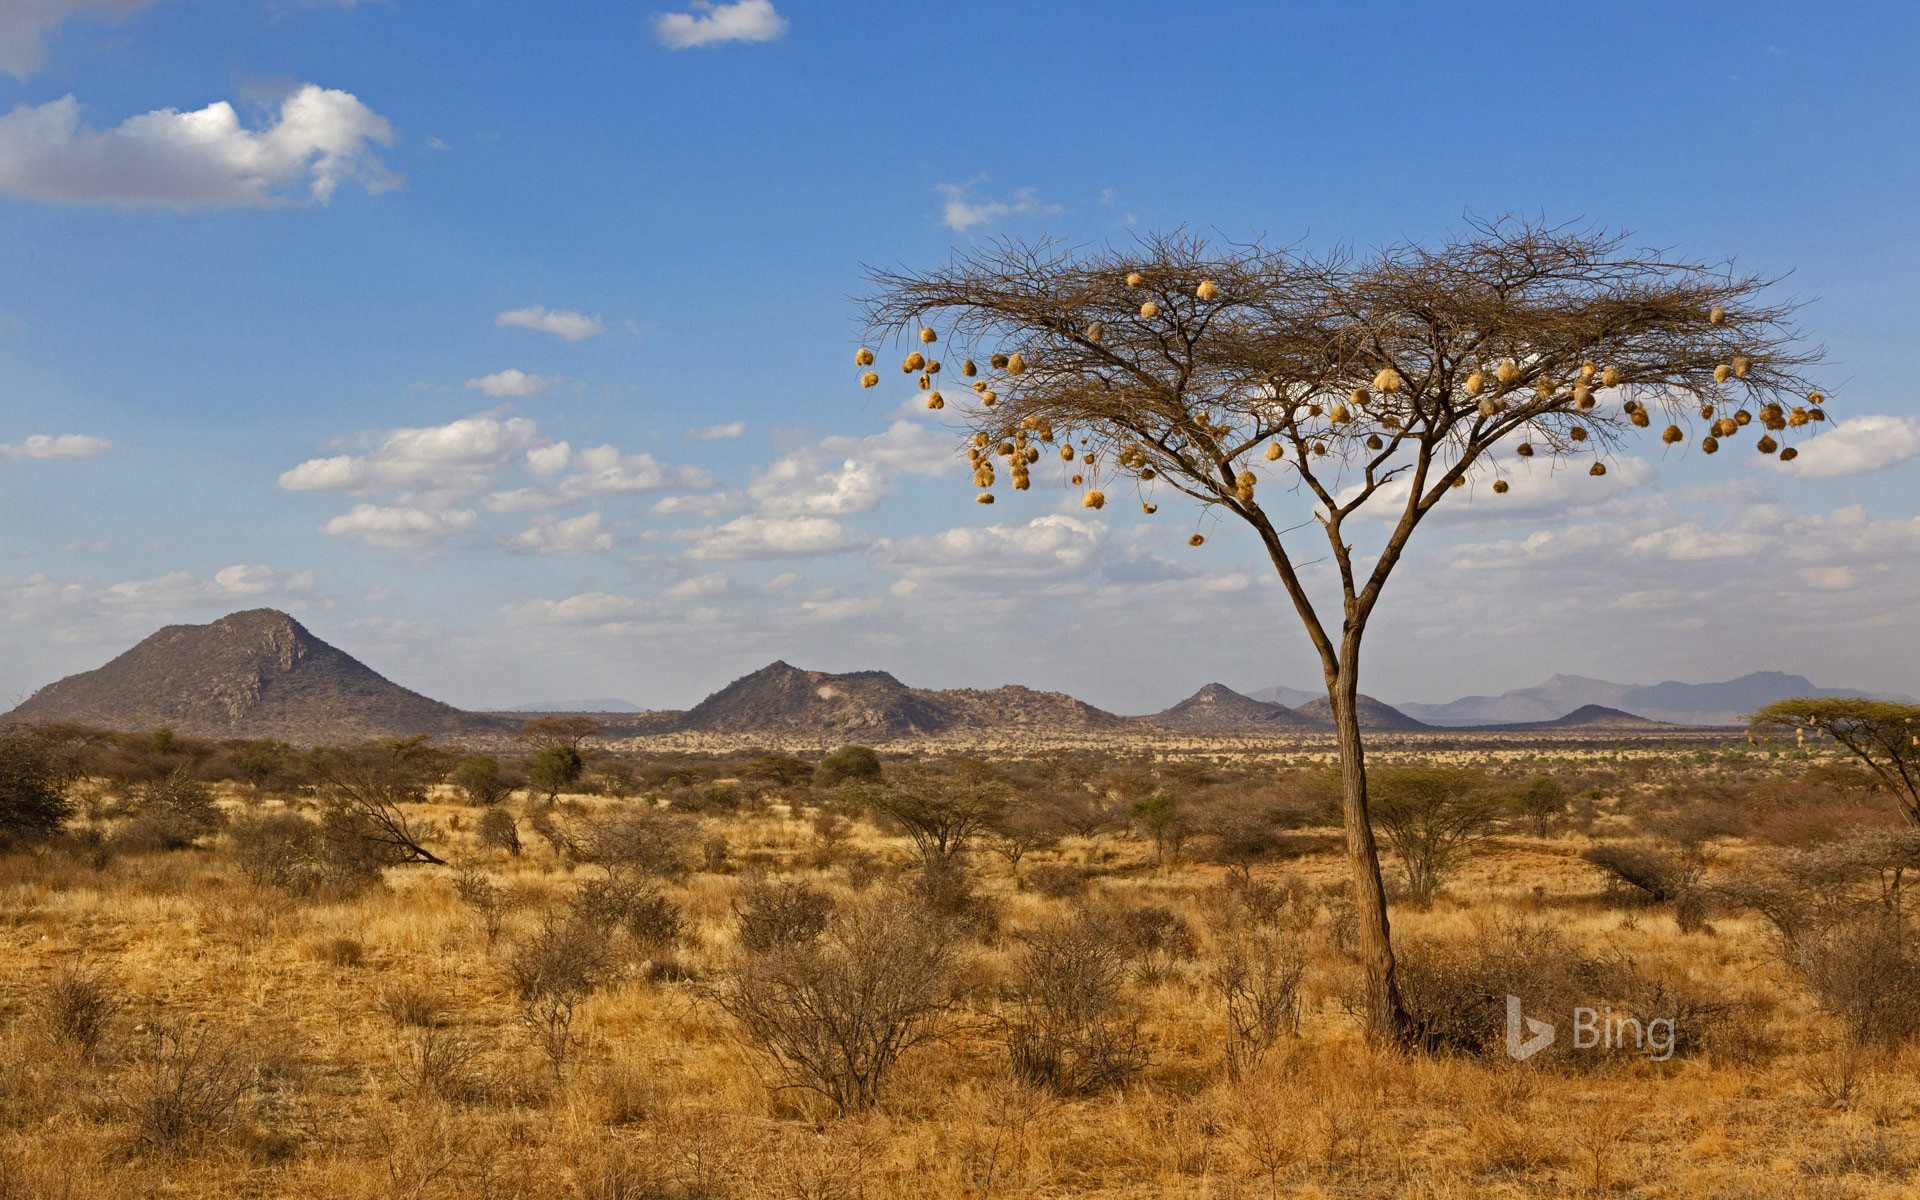 Weaverbird nests hanging from acacia tree in Samburu National Reserve, Kenya